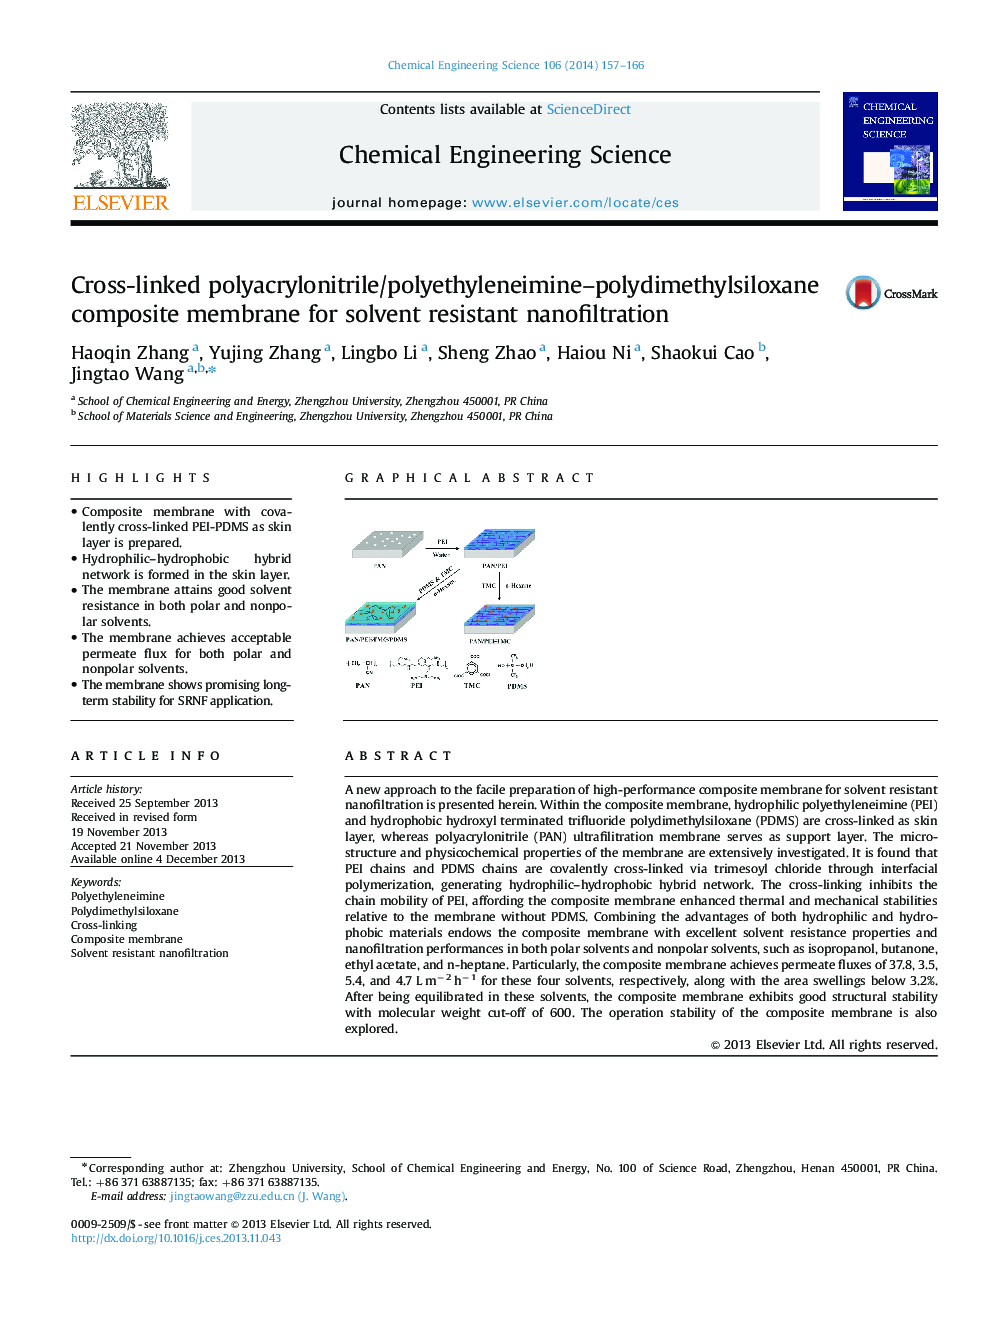 Cross-linked polyacrylonitrile/polyethyleneimine–polydimethylsiloxane composite membrane for solvent resistant nanofiltration